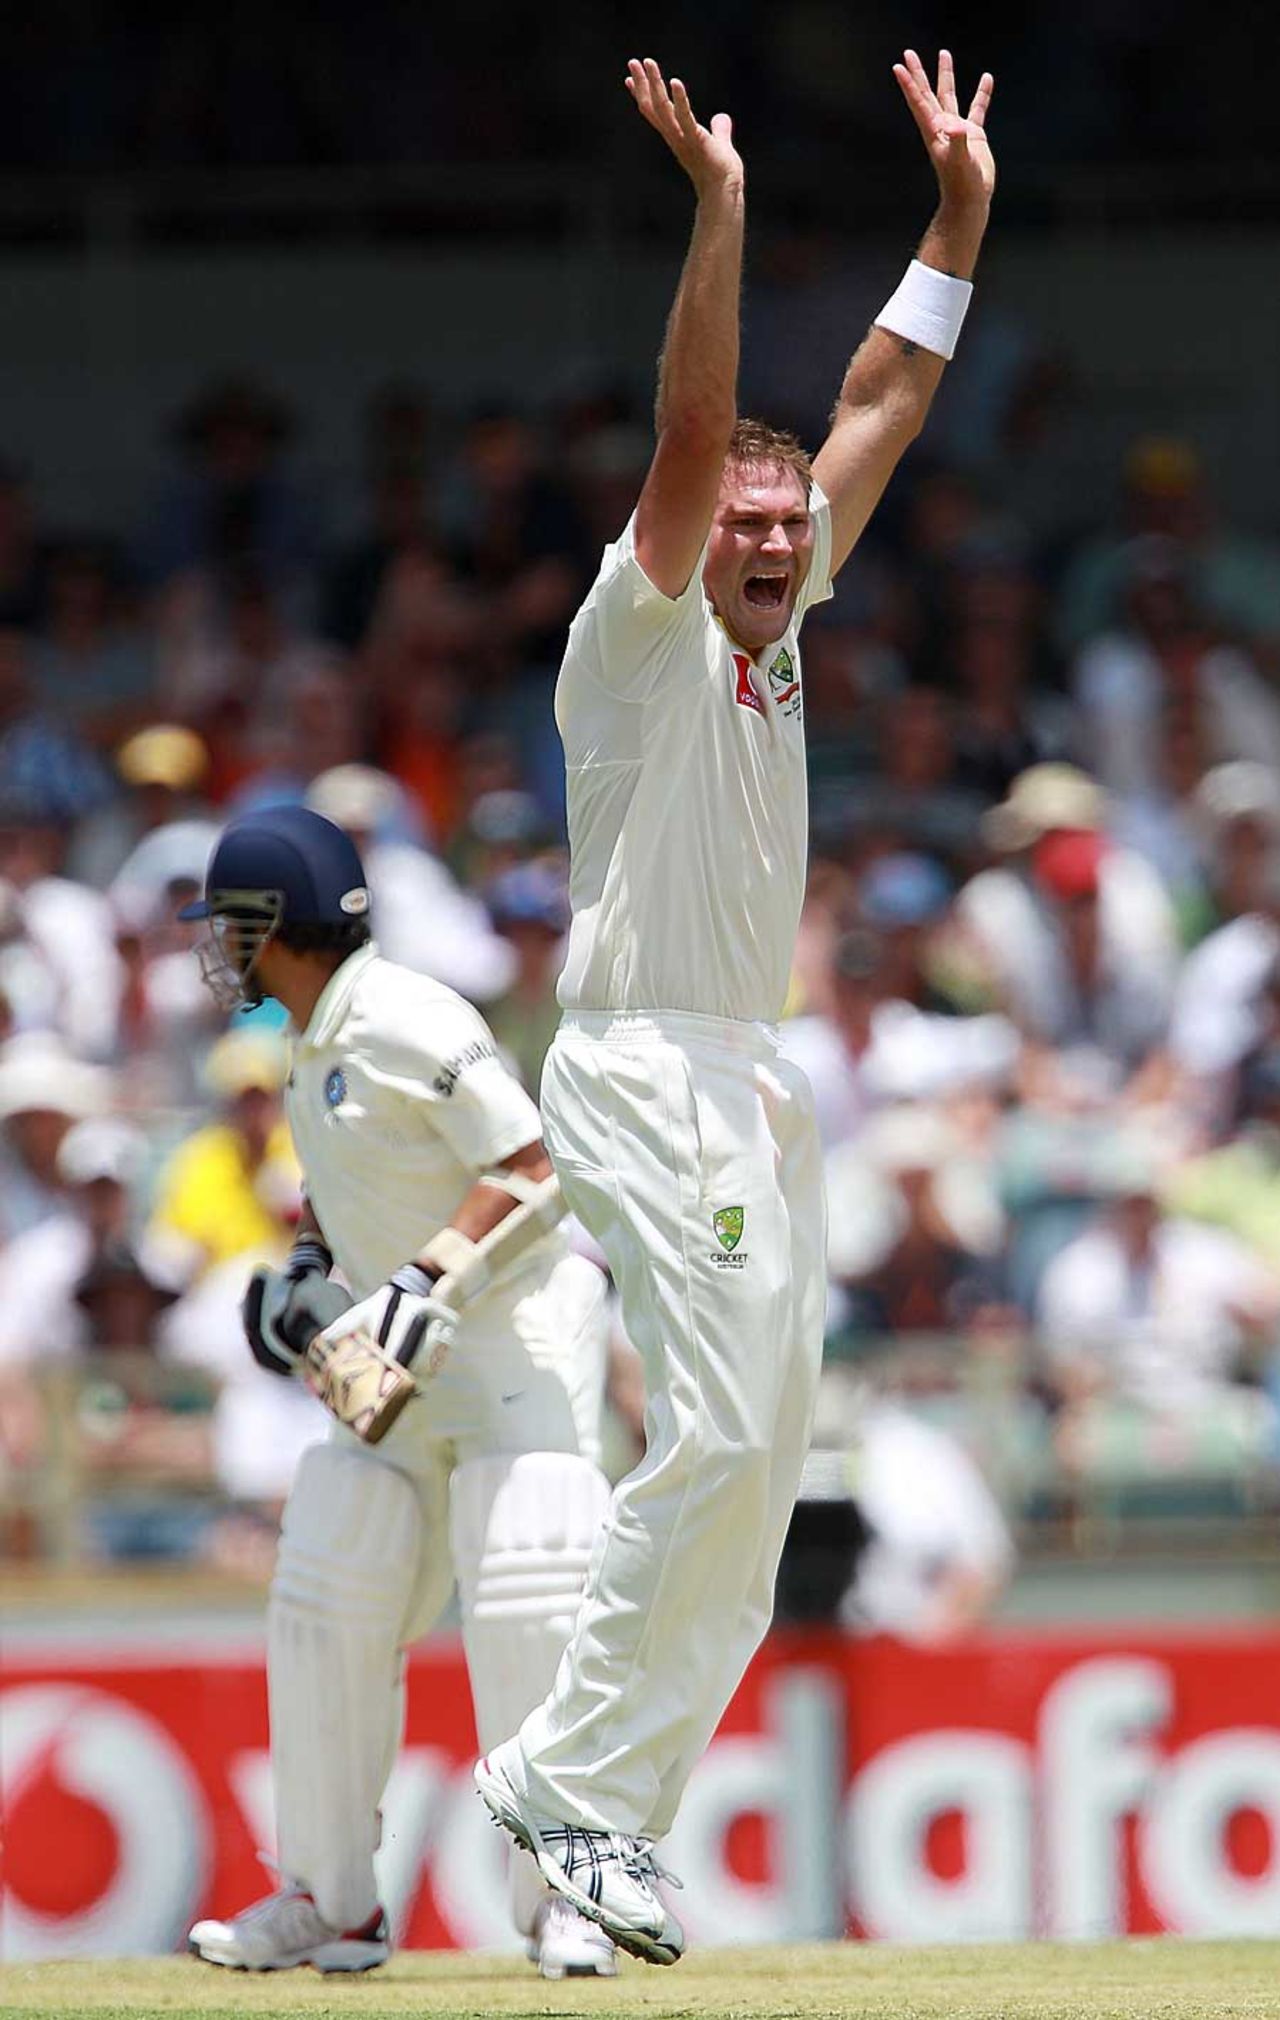 Ryan Harris trapped Sachin Tendulkar in front, Australia v India, 3rd Test, Perth, 1st day, January 13, 2012